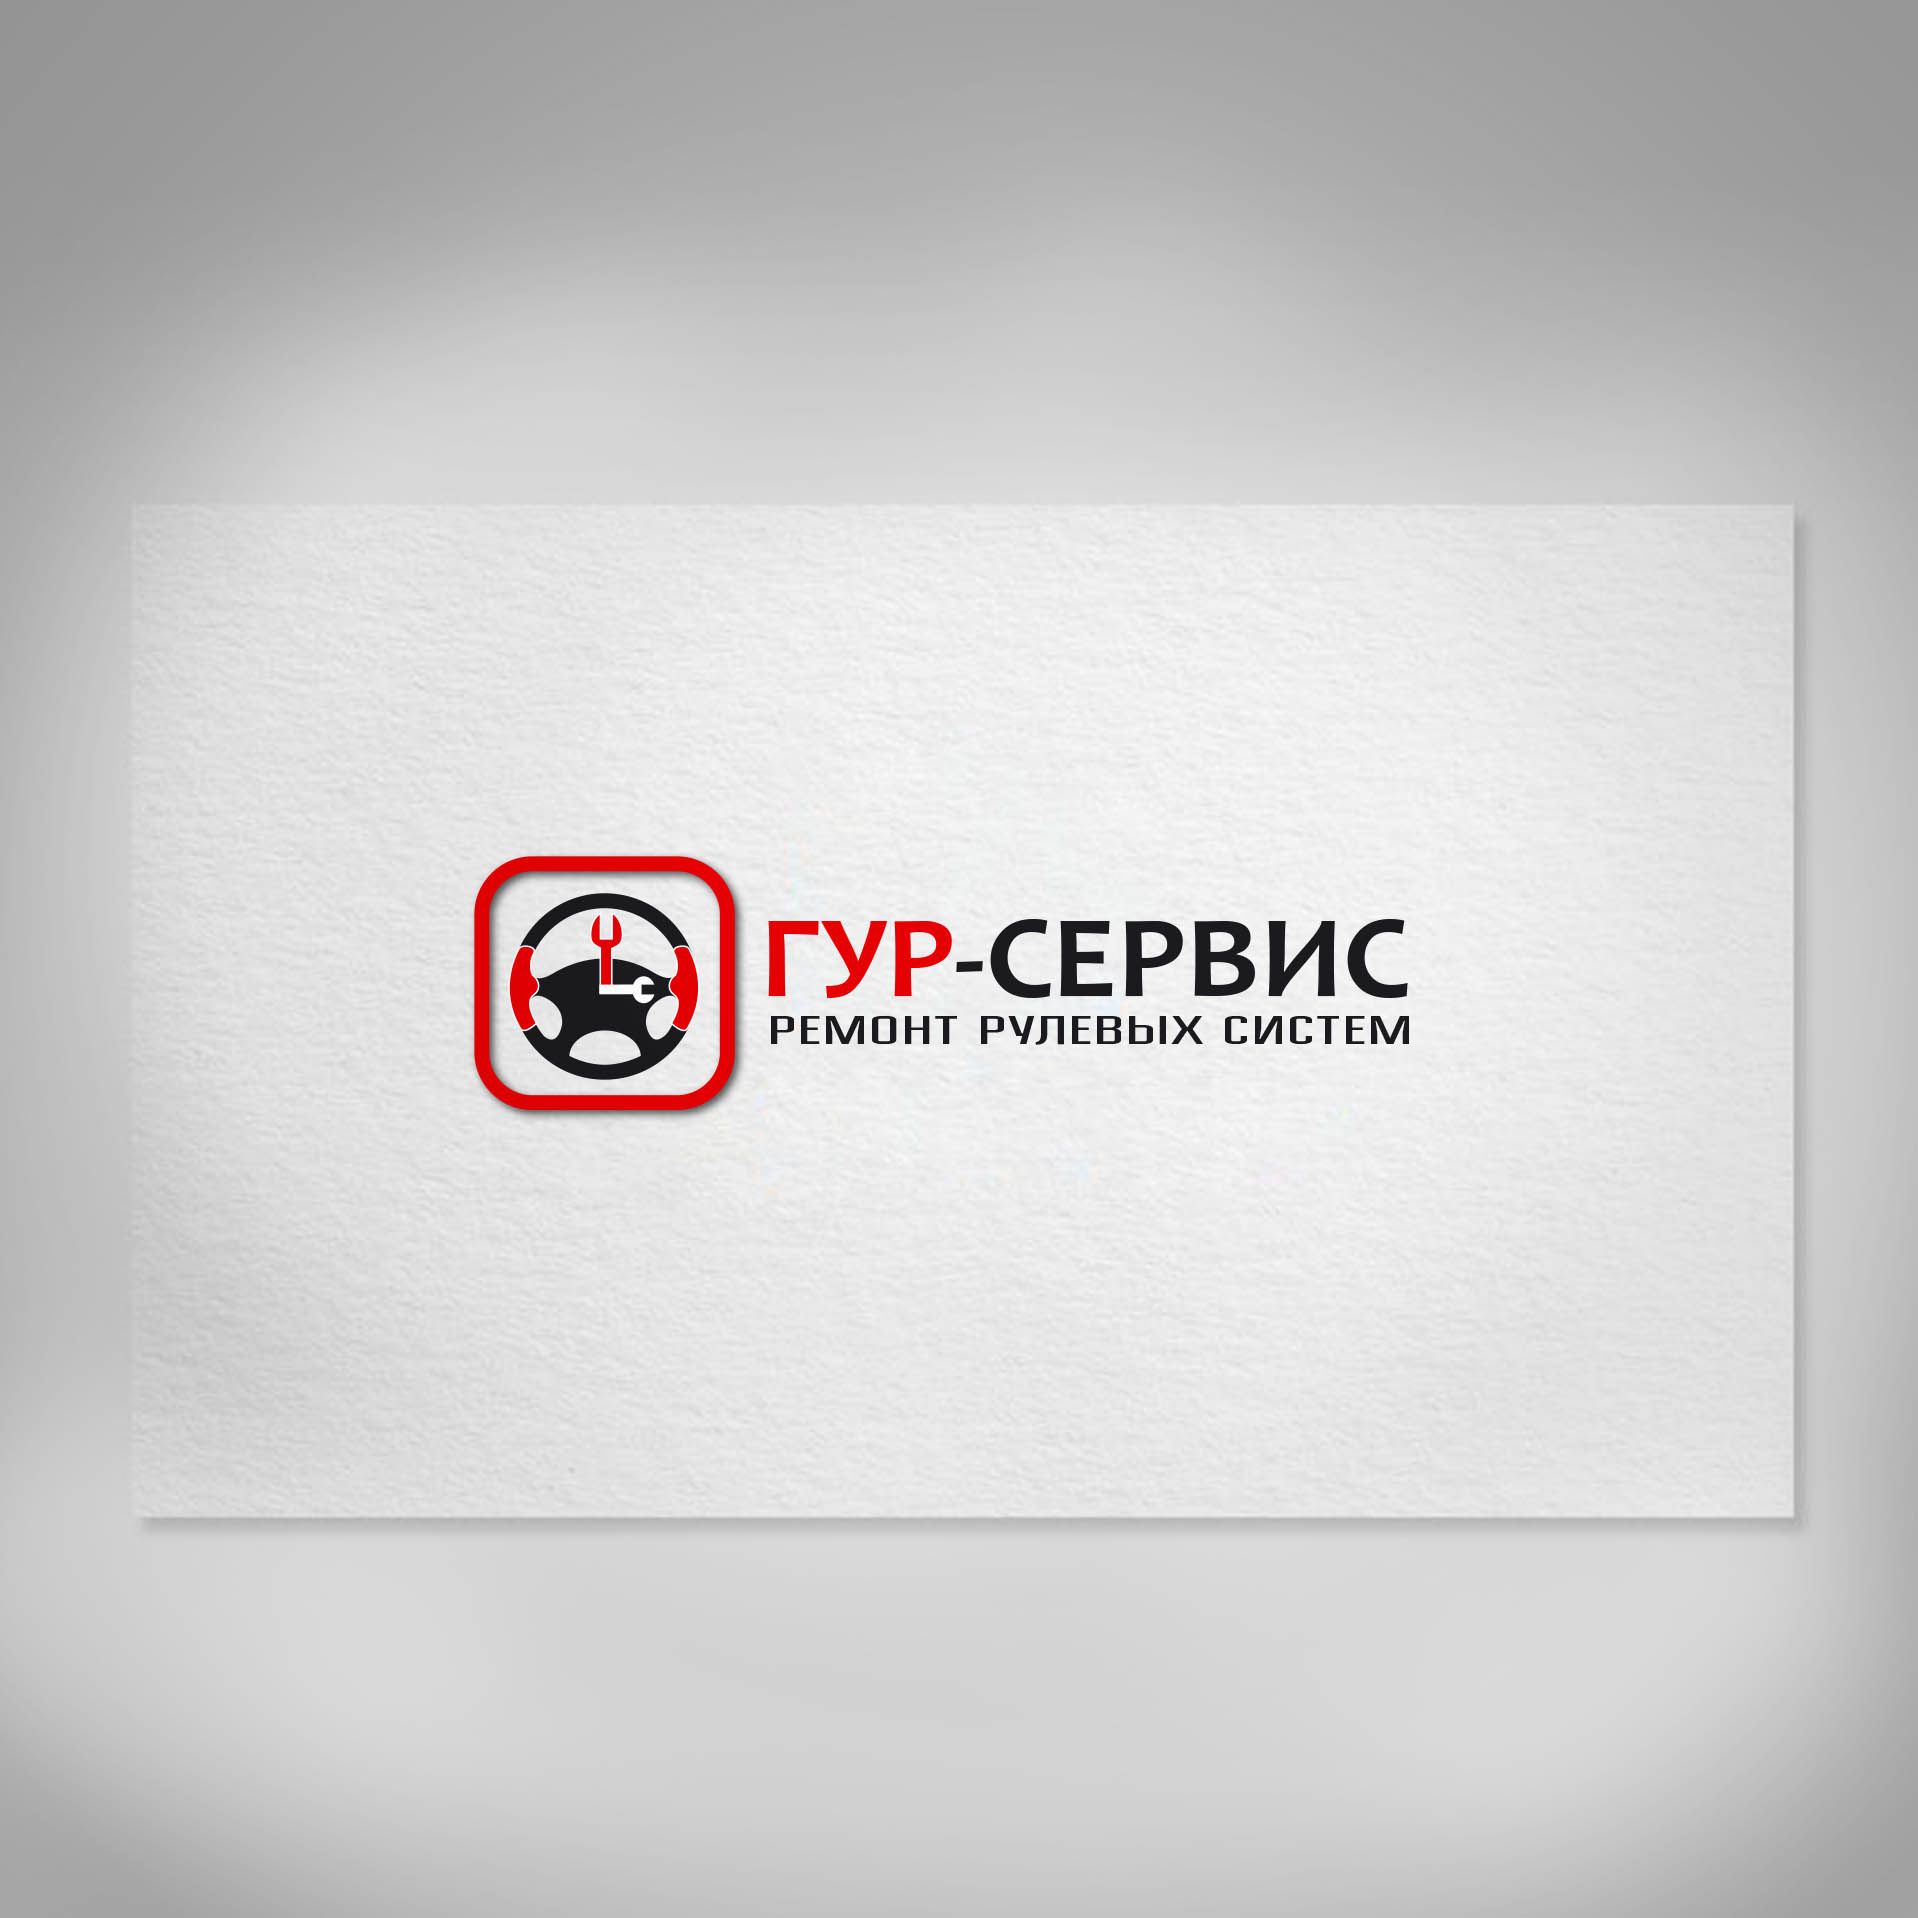 Логотип для ГУР-СЕРВИС - дизайнер indus-v-v